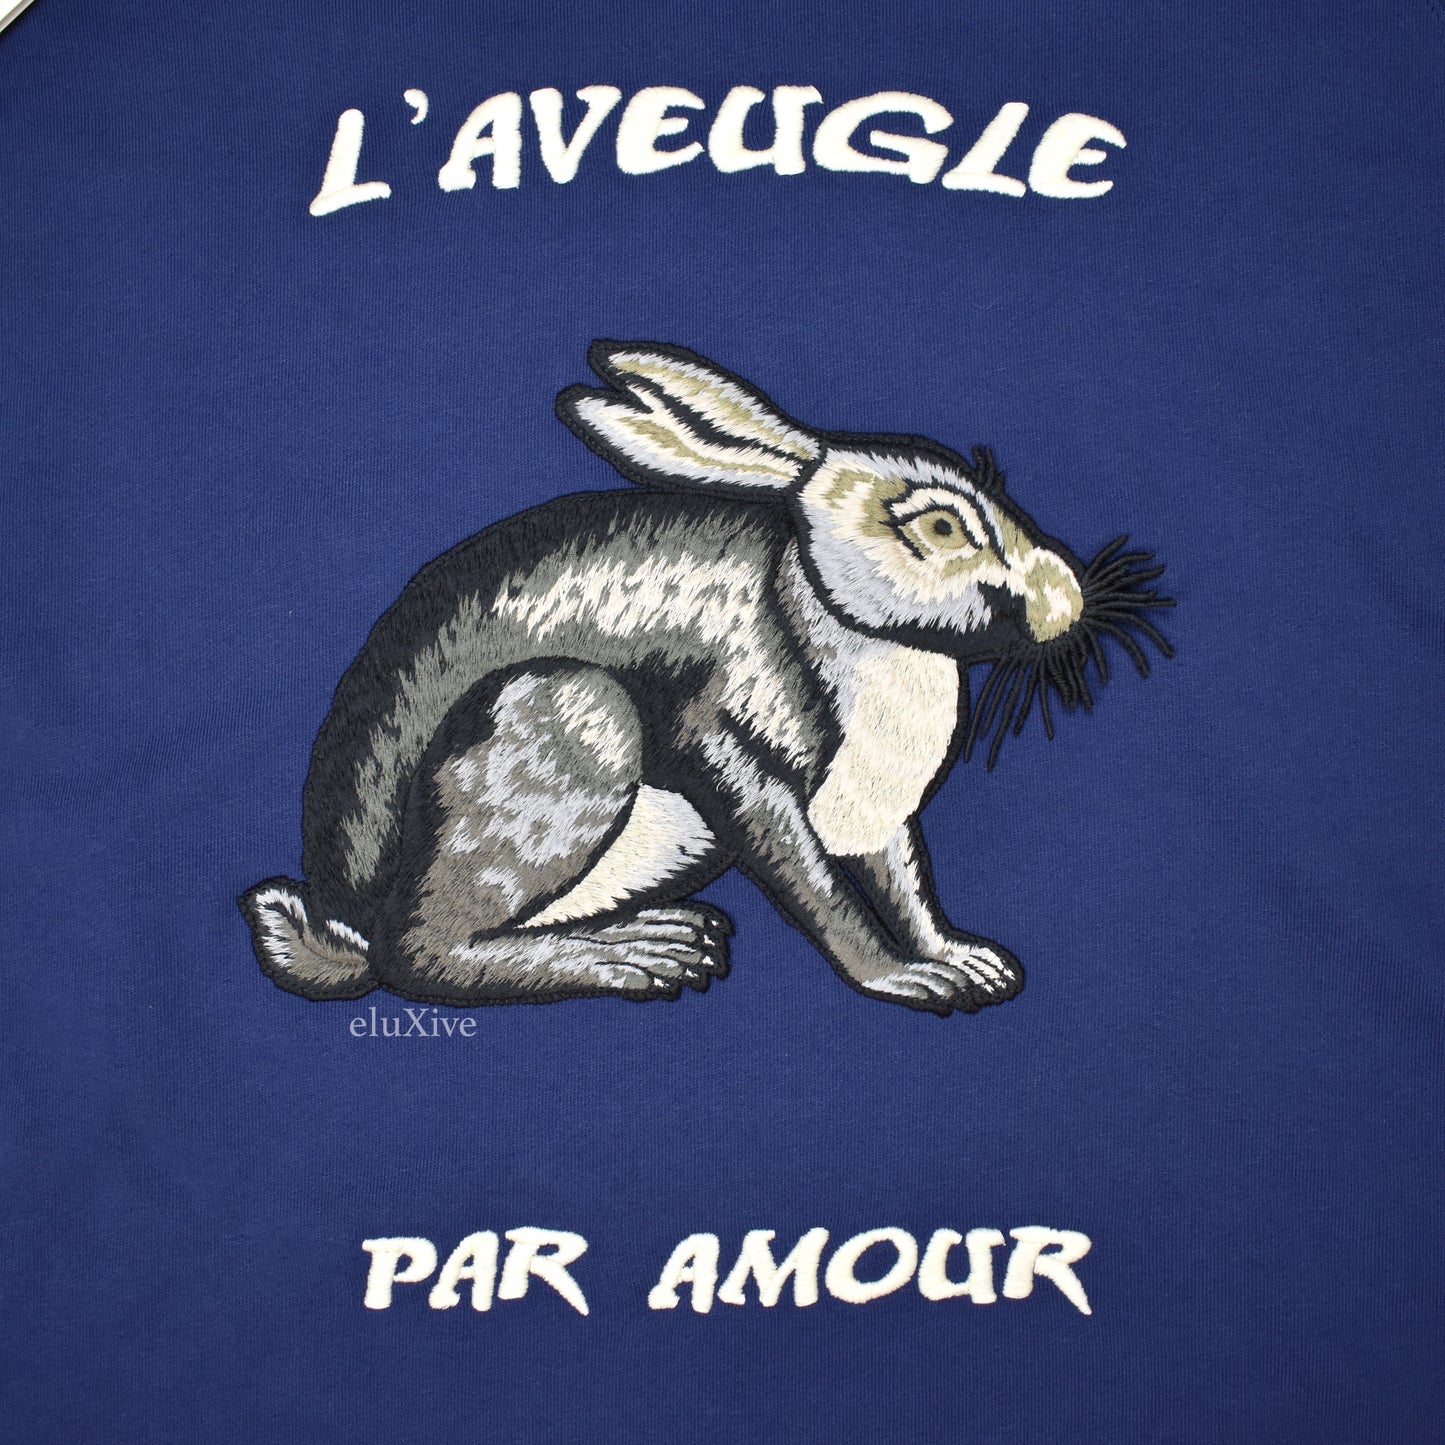 Gucci - Blue Rabbit Embroidered Sweatshirt